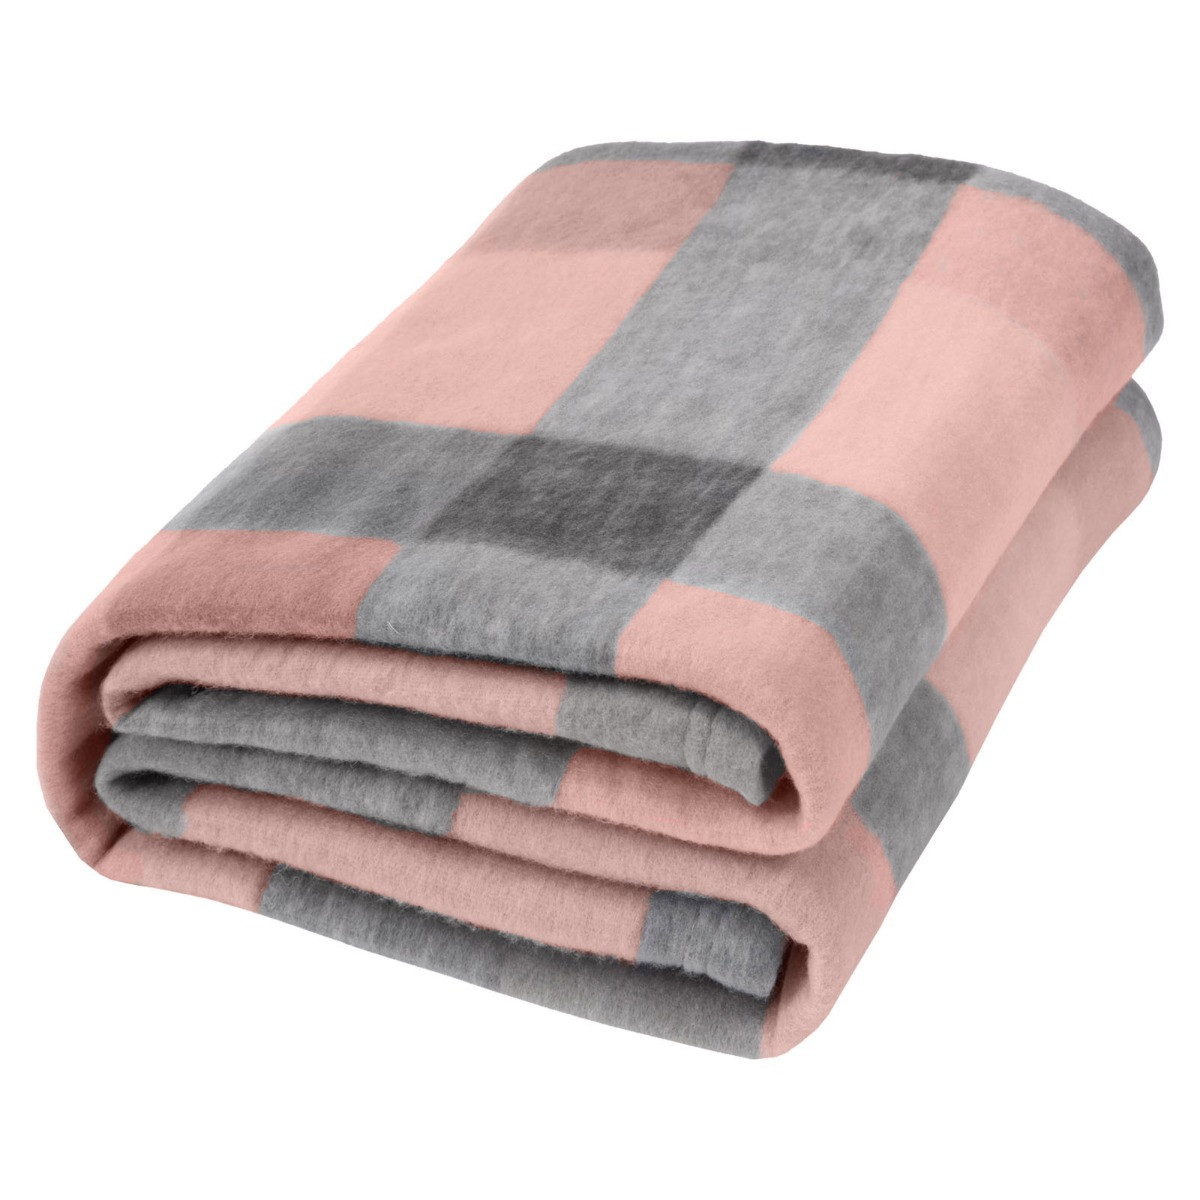 Dreamscene Tartan Check Fleece Throw, Blush Pink/Grey - 120 x 150 cm>